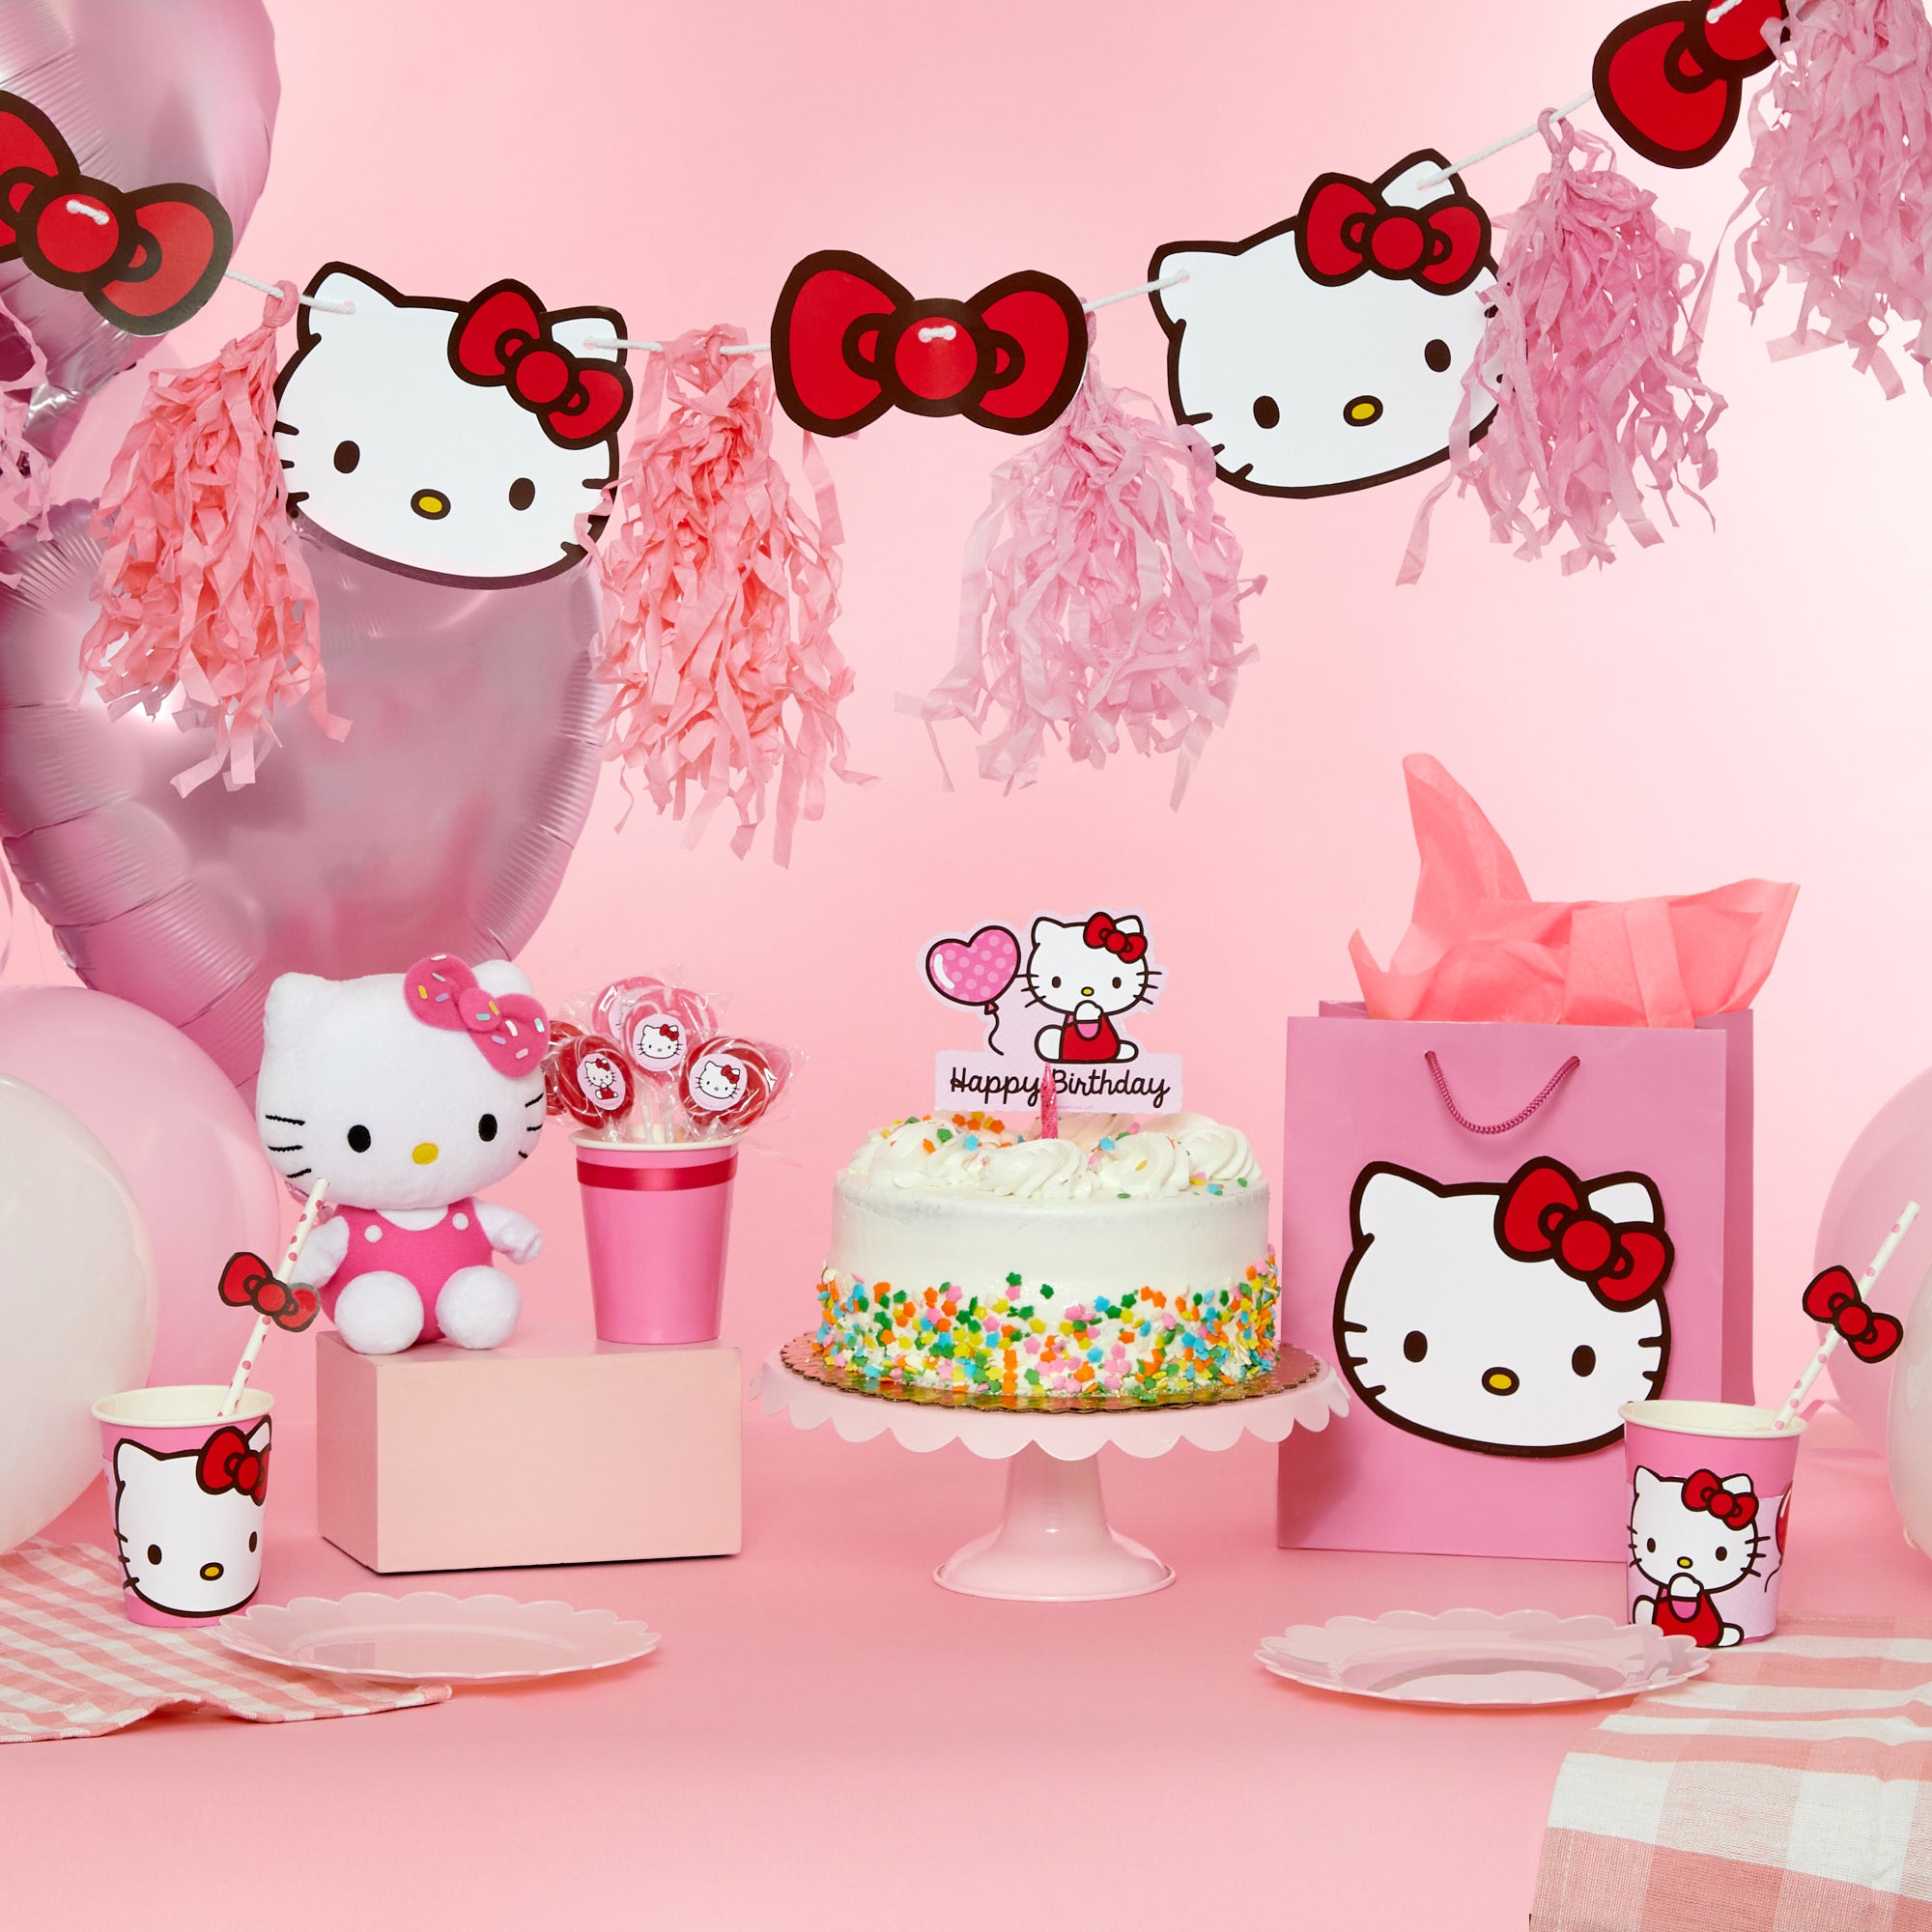 Hello Kitty birthday party decoration ideas